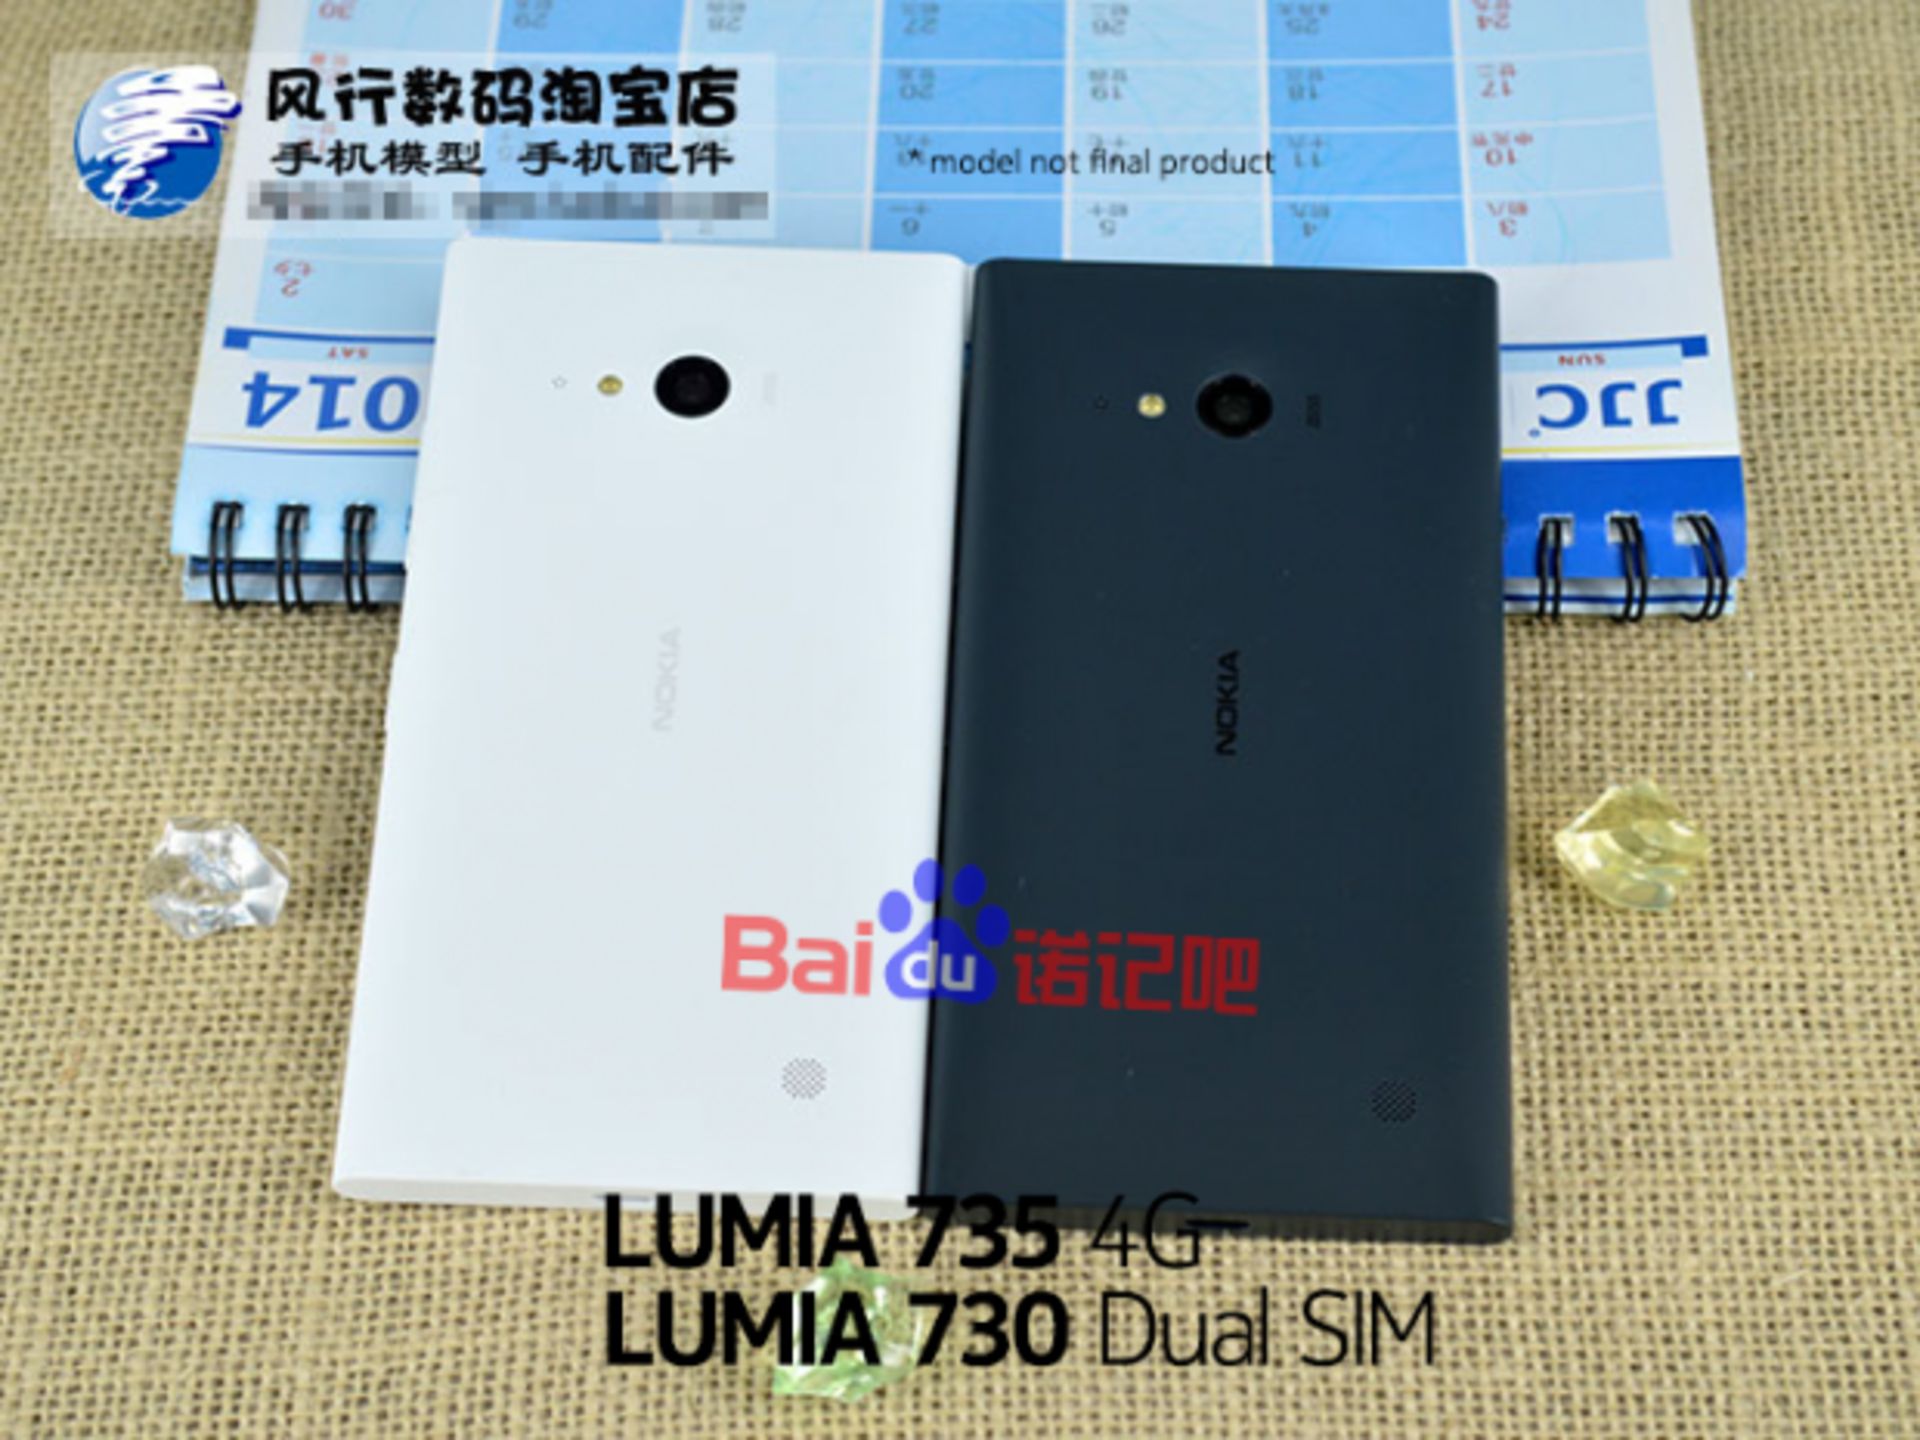 Nokia-Lumia-735-4G-Lumia-730-Dual-Sim-2-620x465